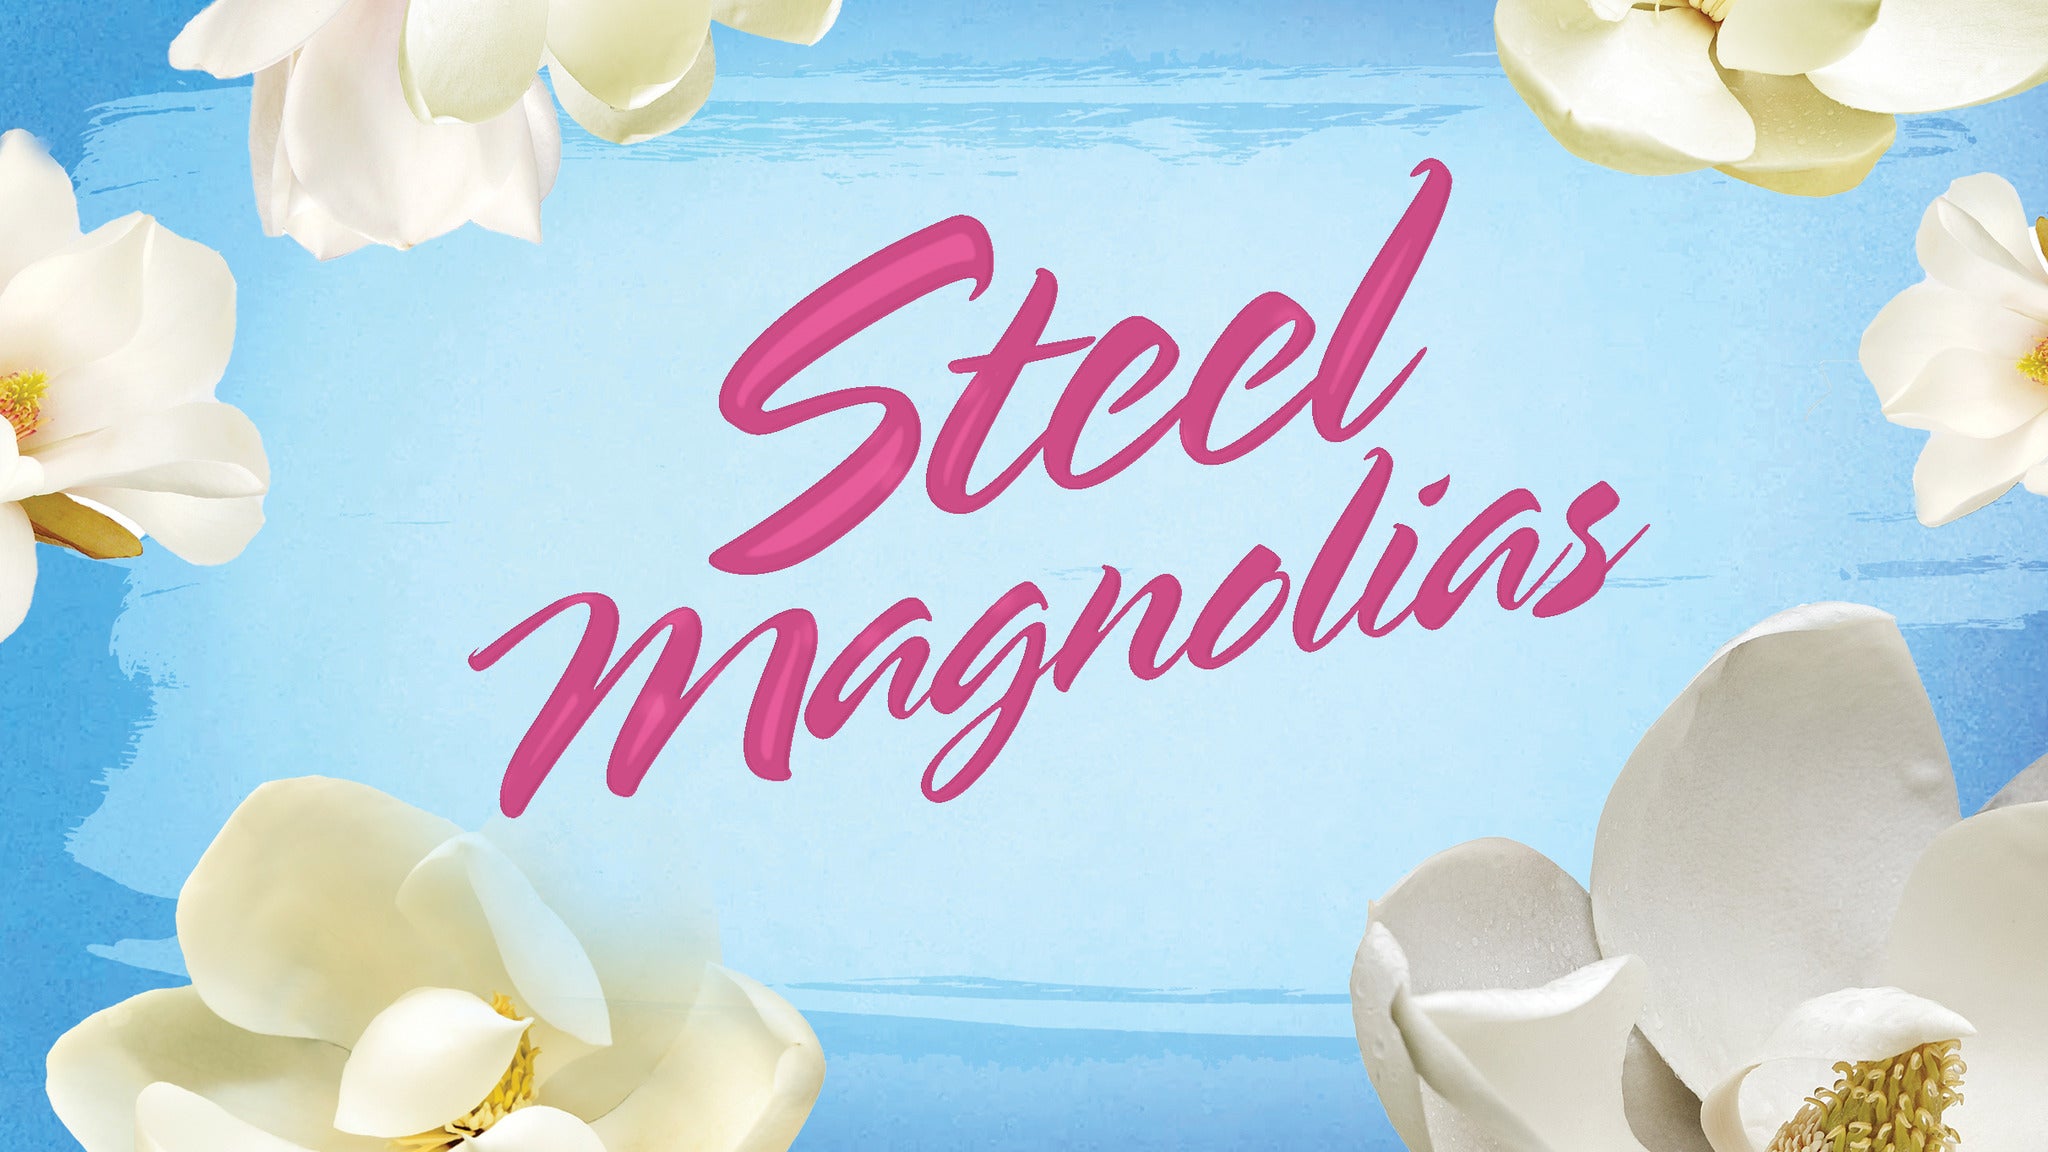 Drury Lane Presents: Steel Magnolias presale information on freepresalepasswords.com